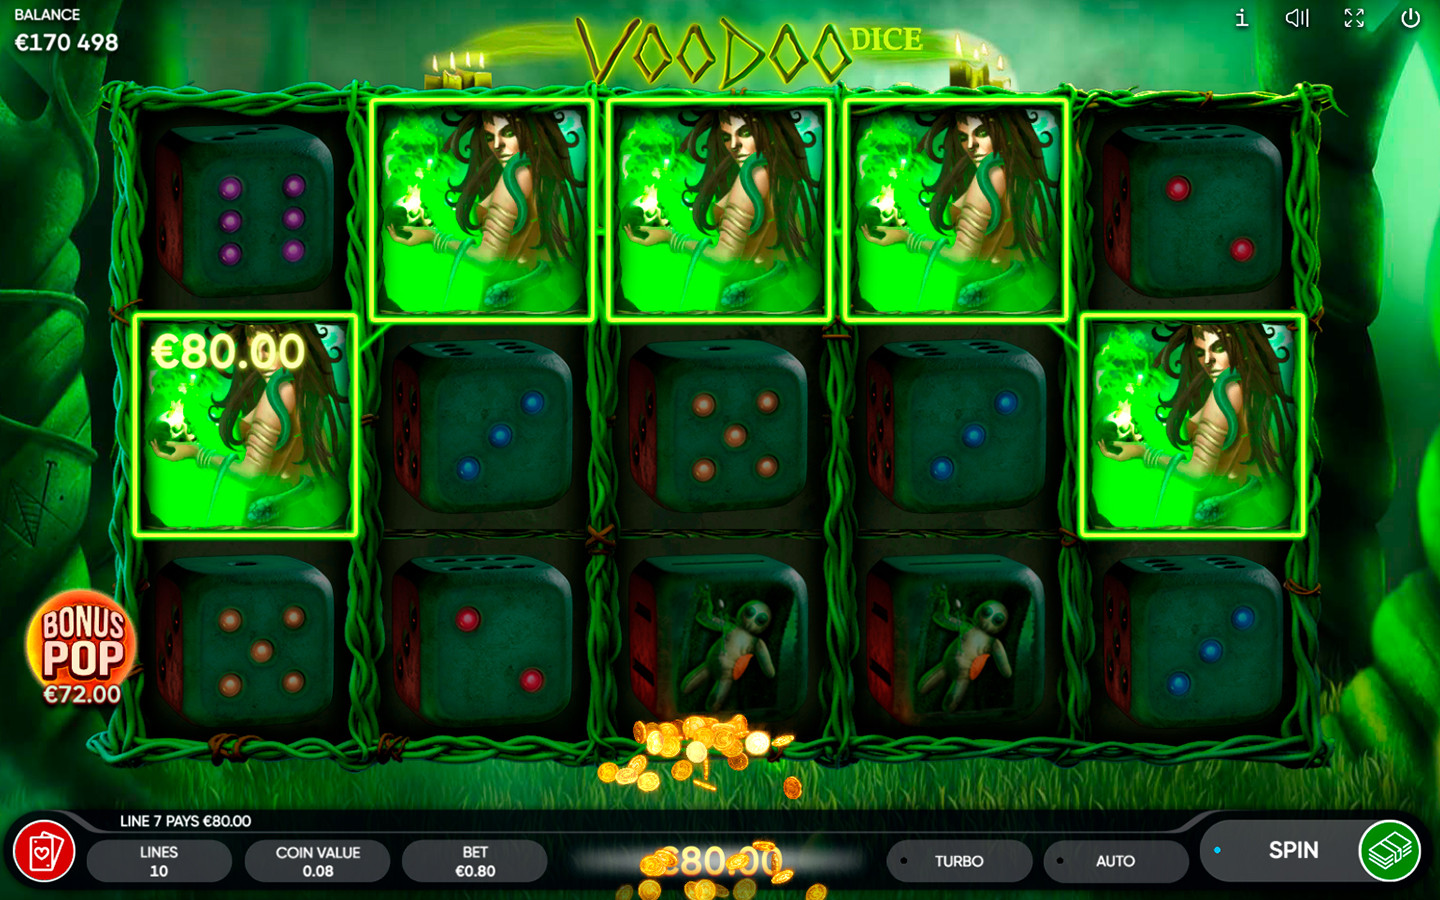 TOP HORROR DICE SLOTS OF 2021 | Play Voodoo Dice slot now!